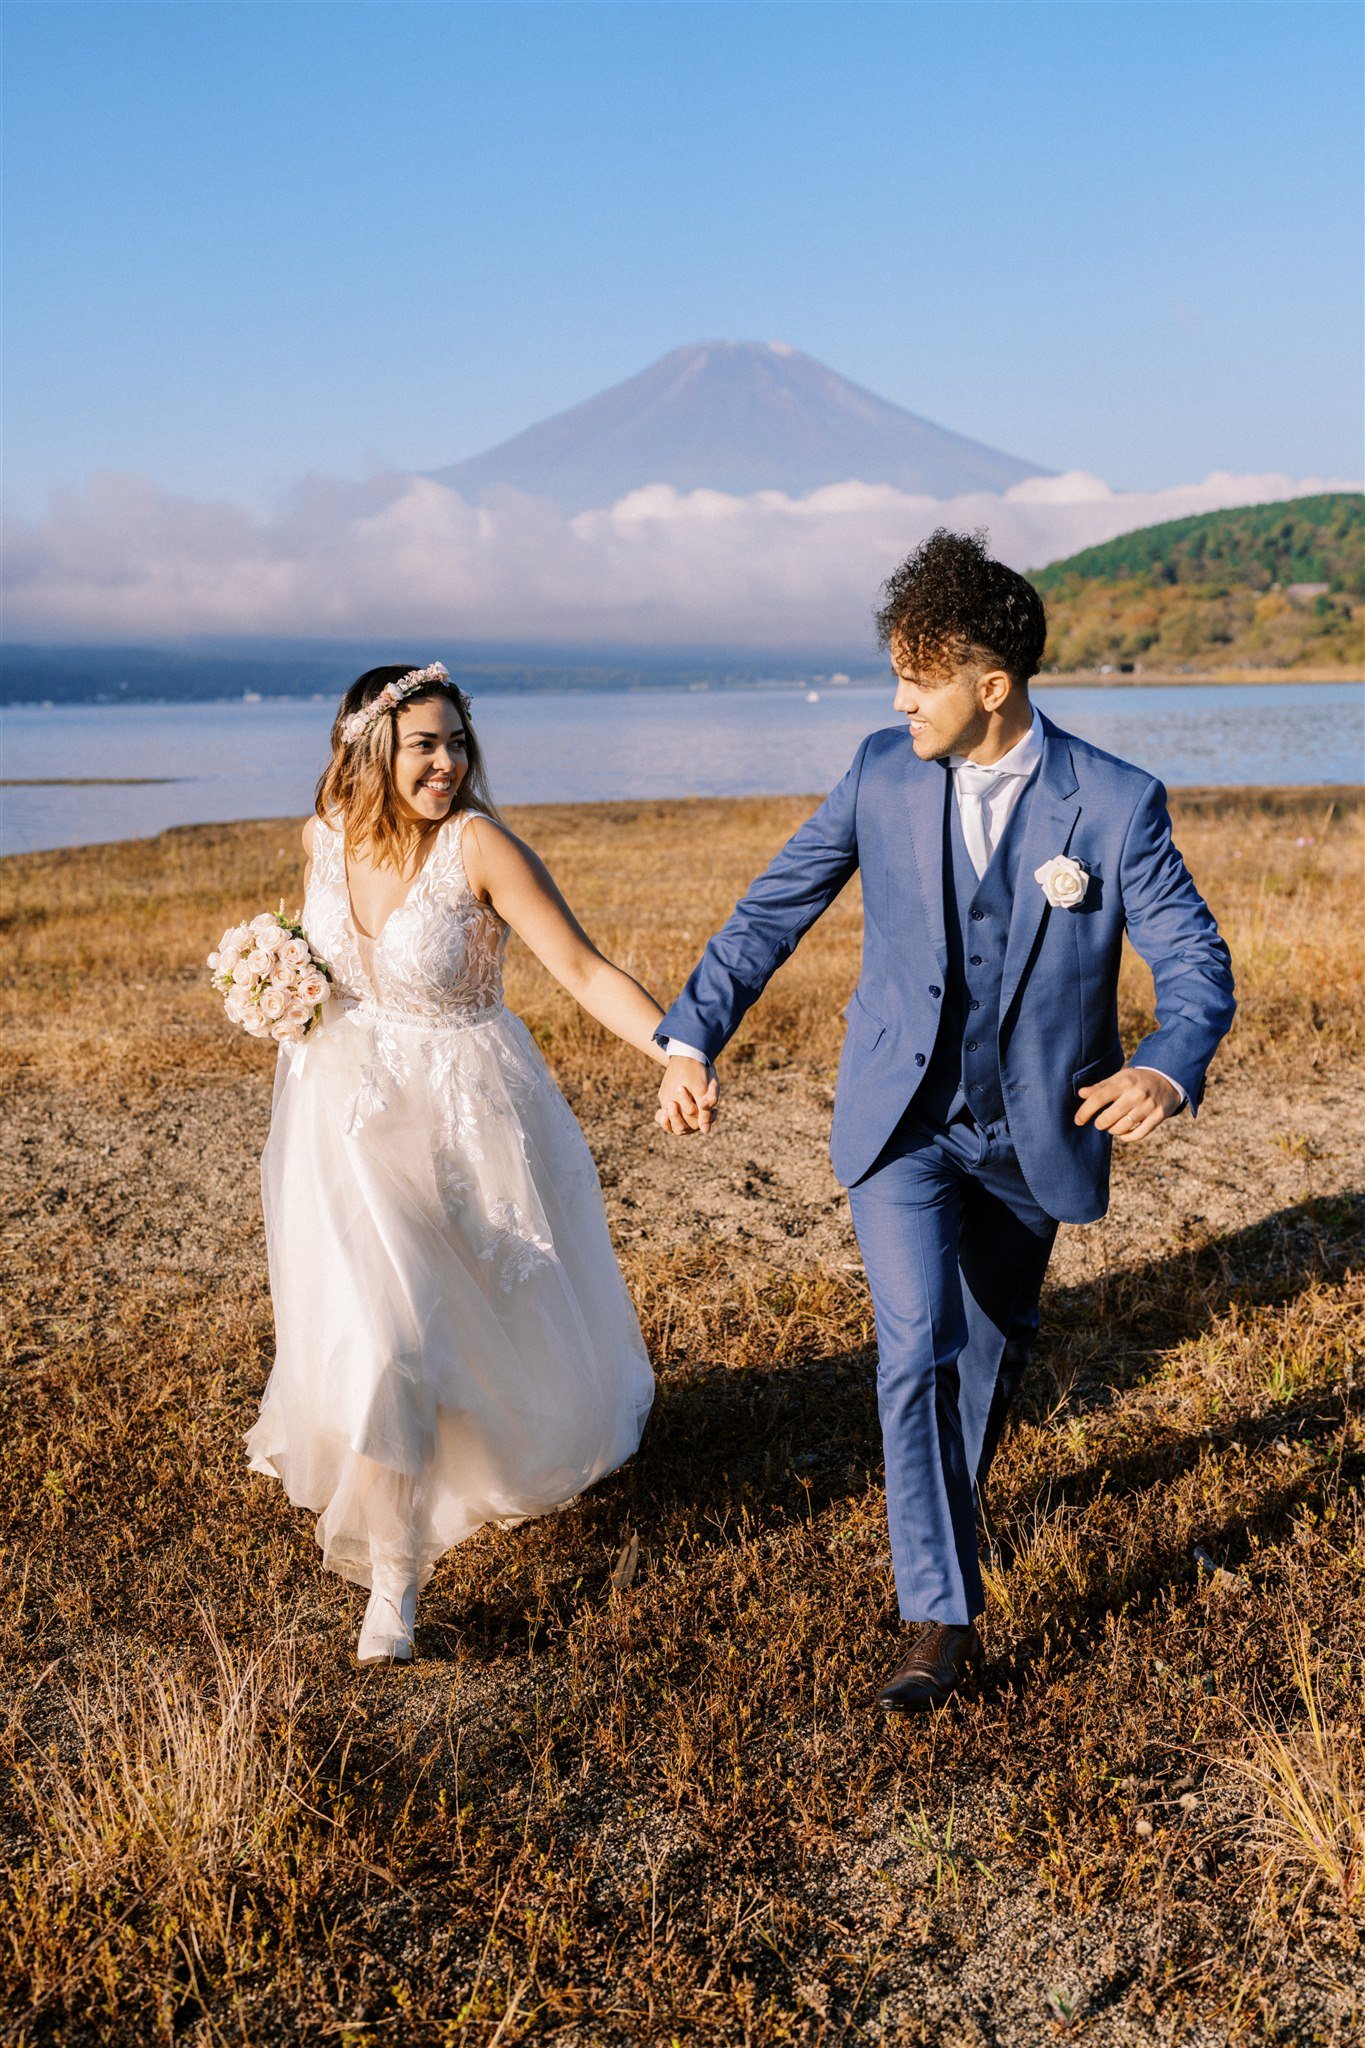 Couples photoshoot at Mount Fuji, Japan